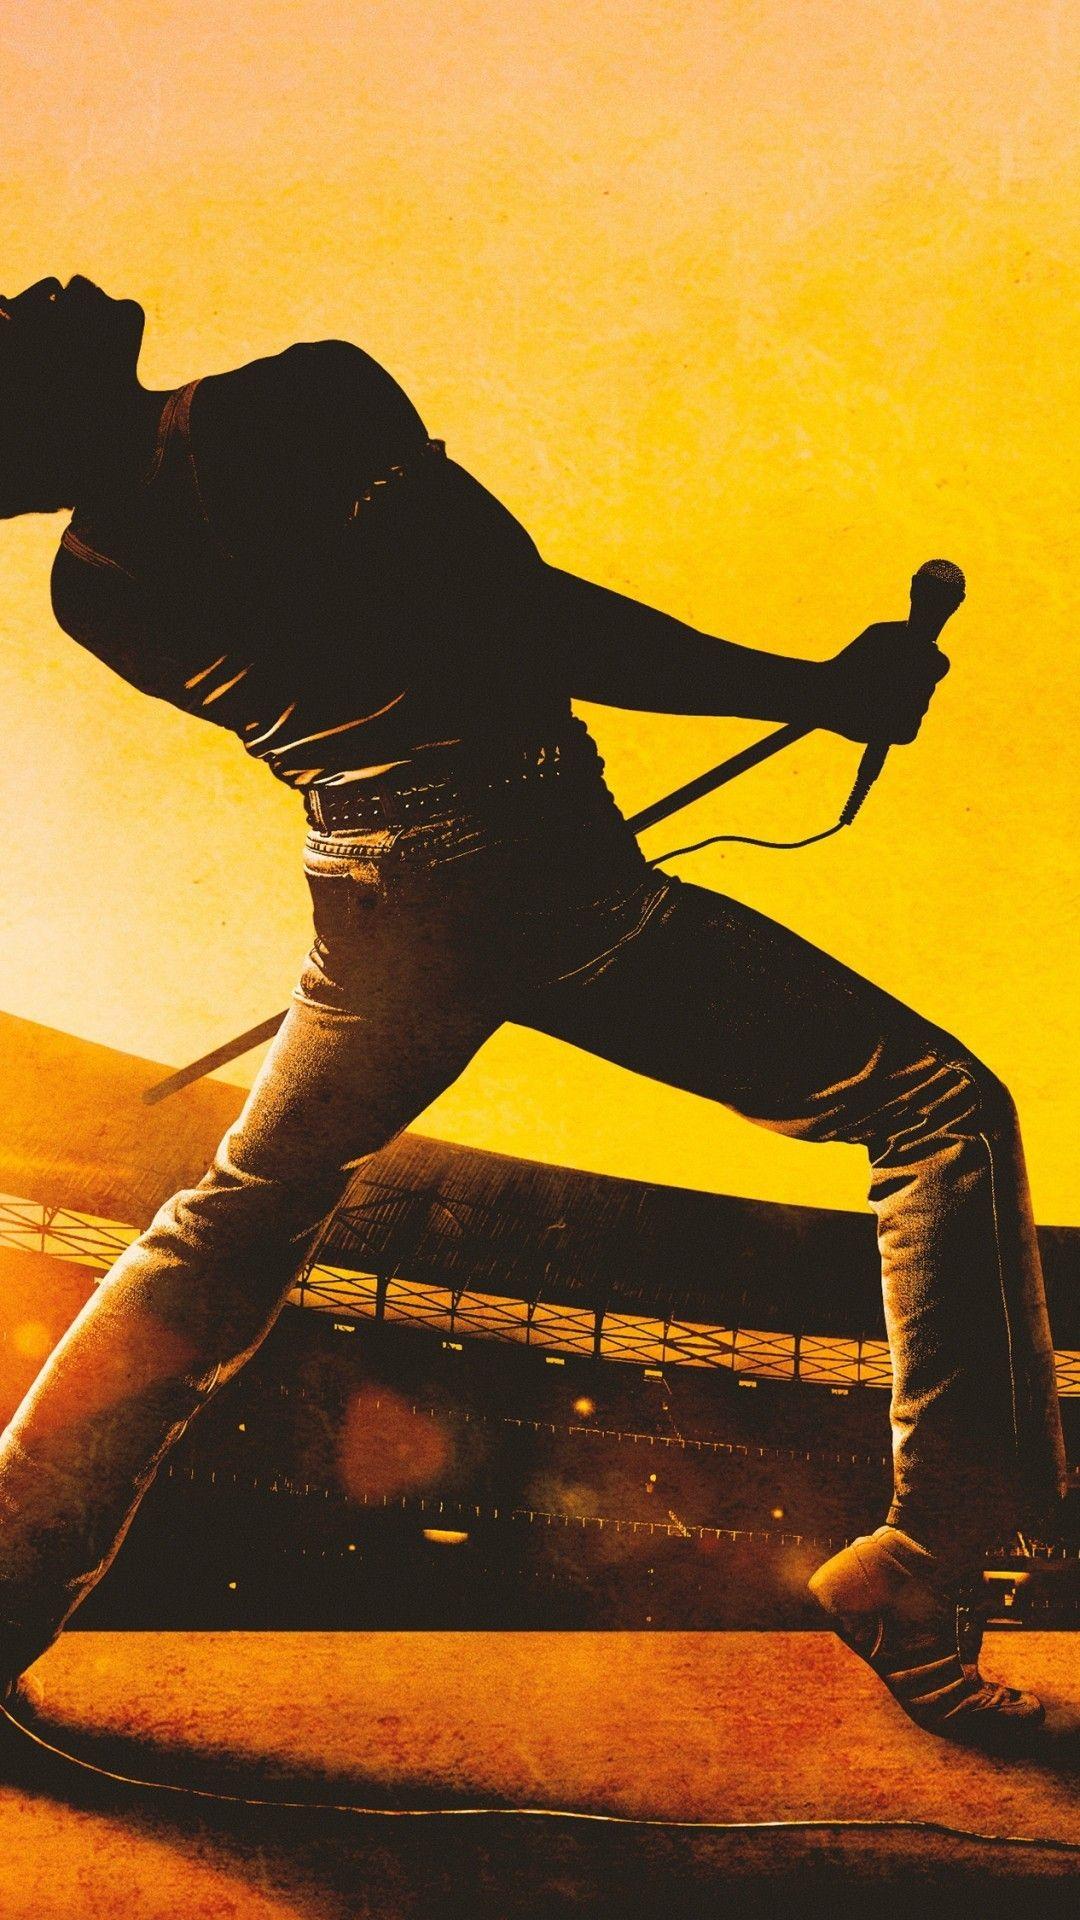 Bohemian Rhapsody for mac download free